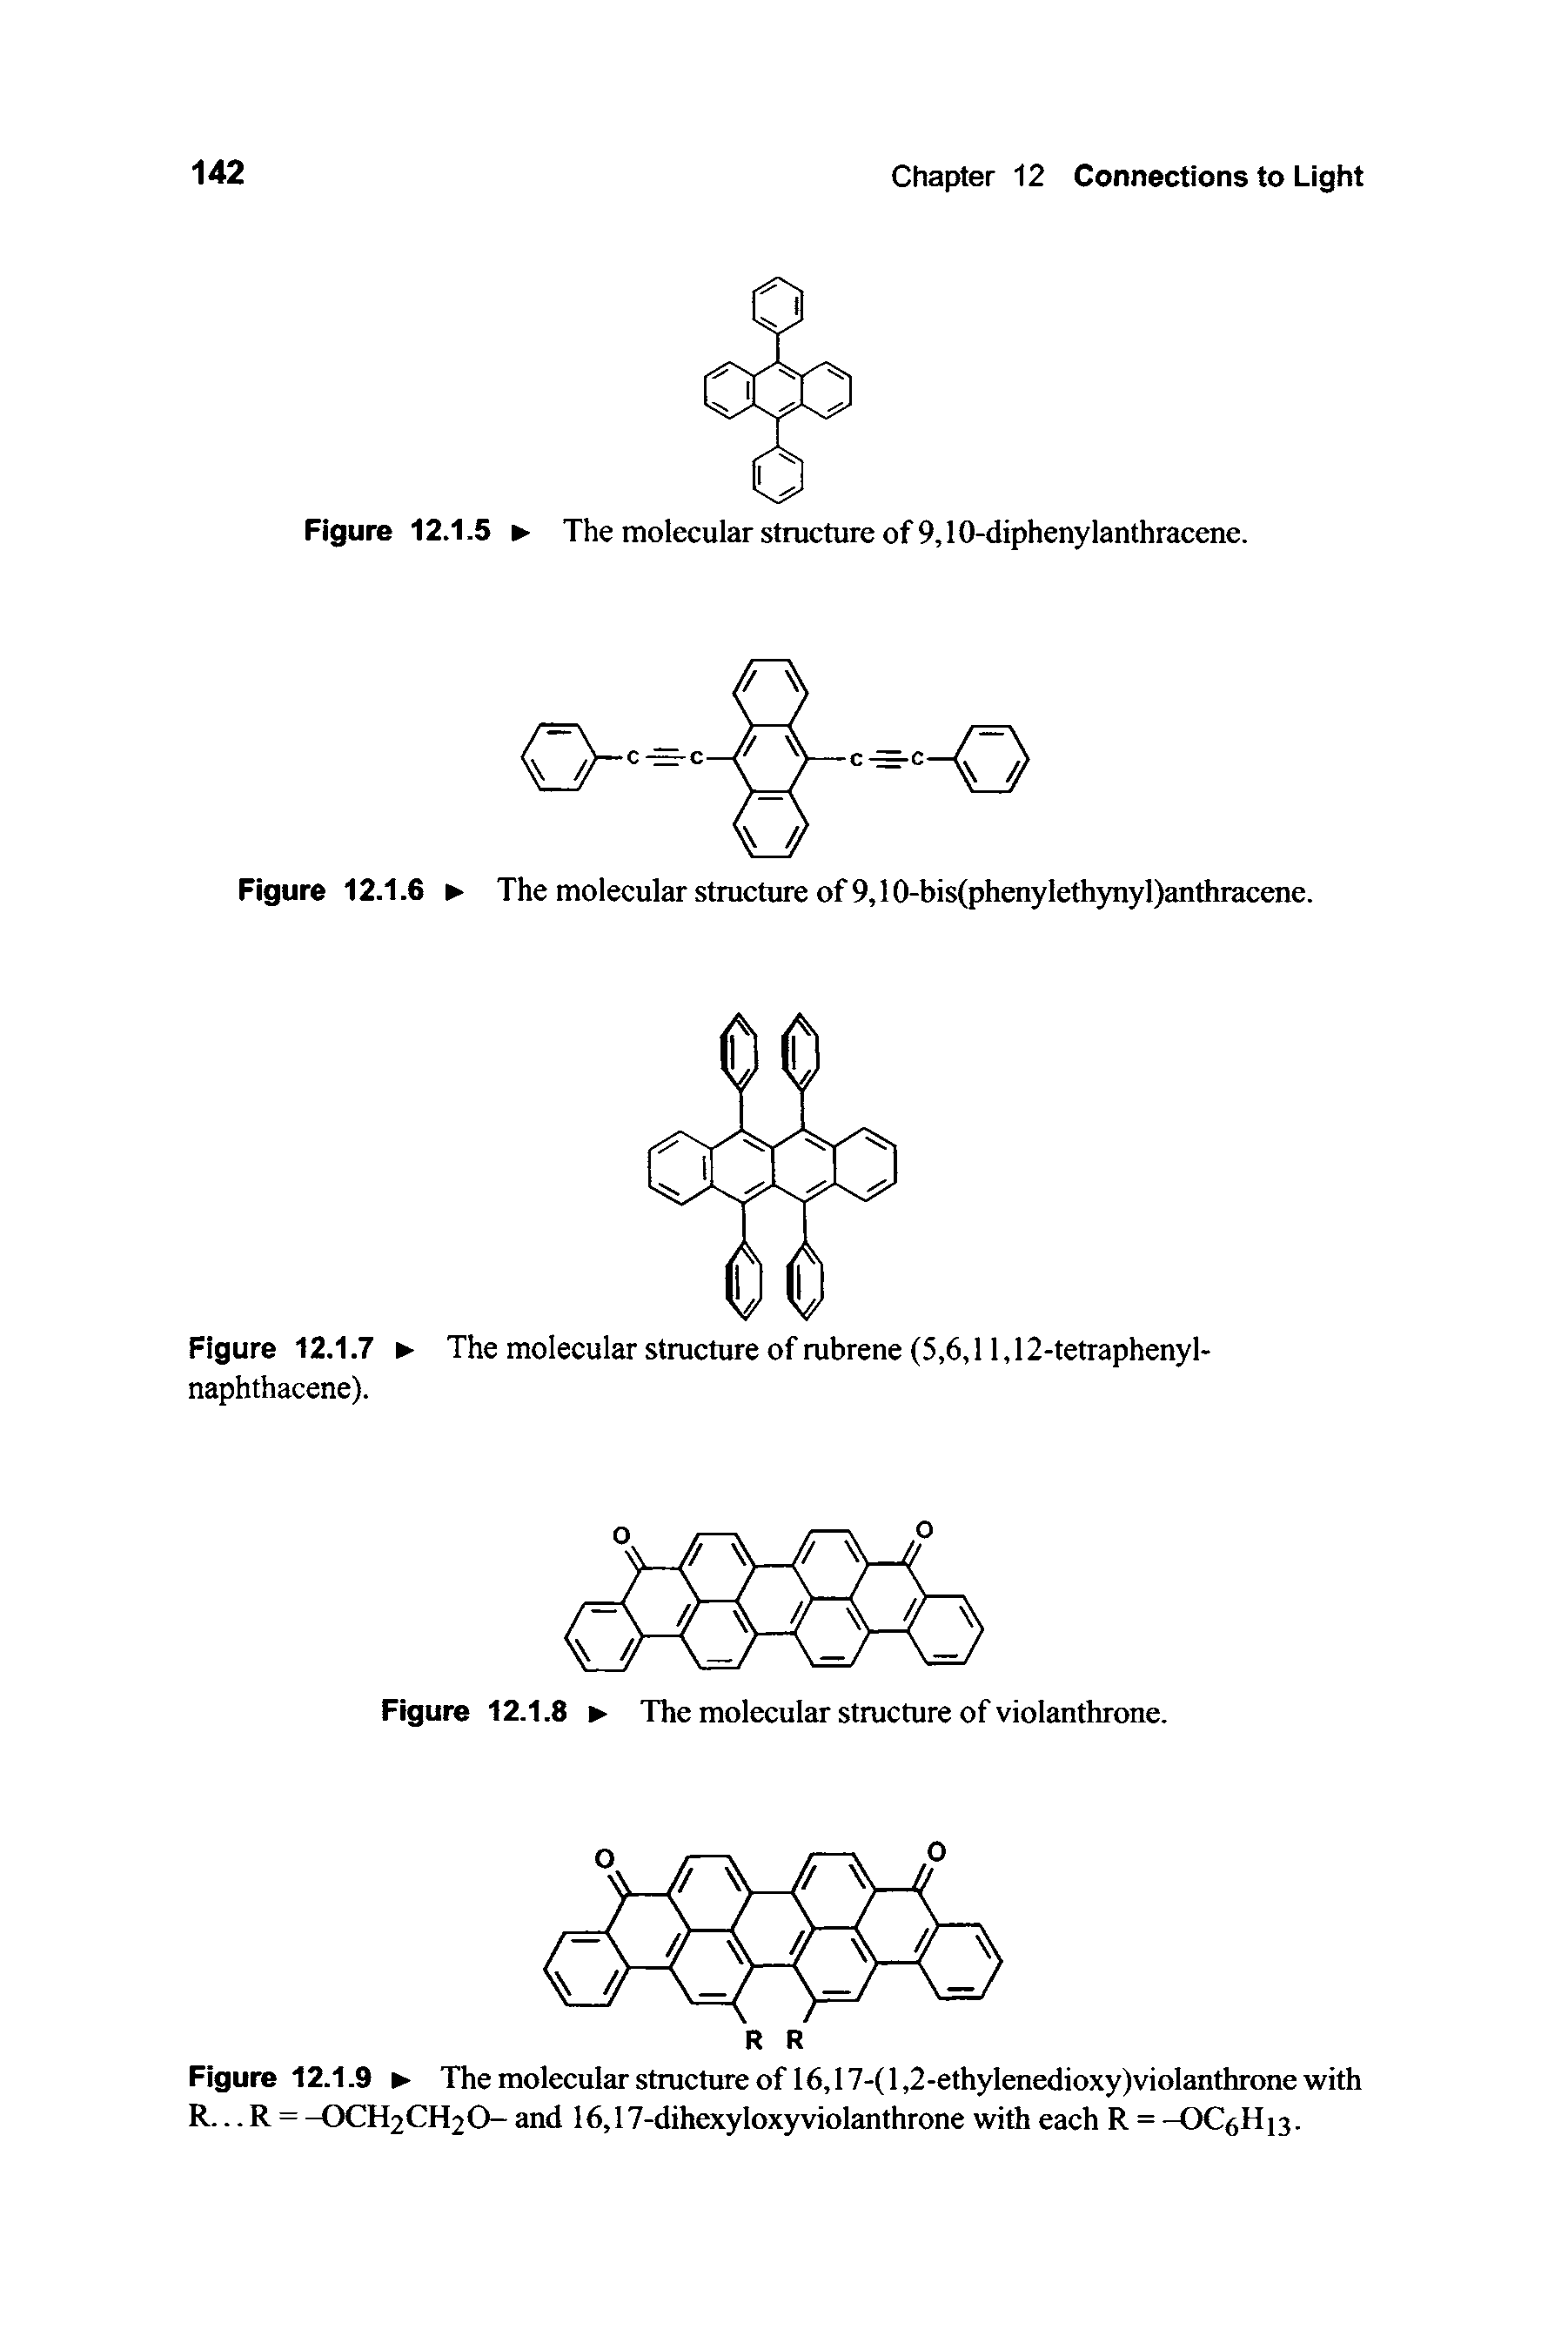 Figure 12.1.7 The molecular structure of rubrene (5,6,11,12-tetraphenyl-naphthacene).